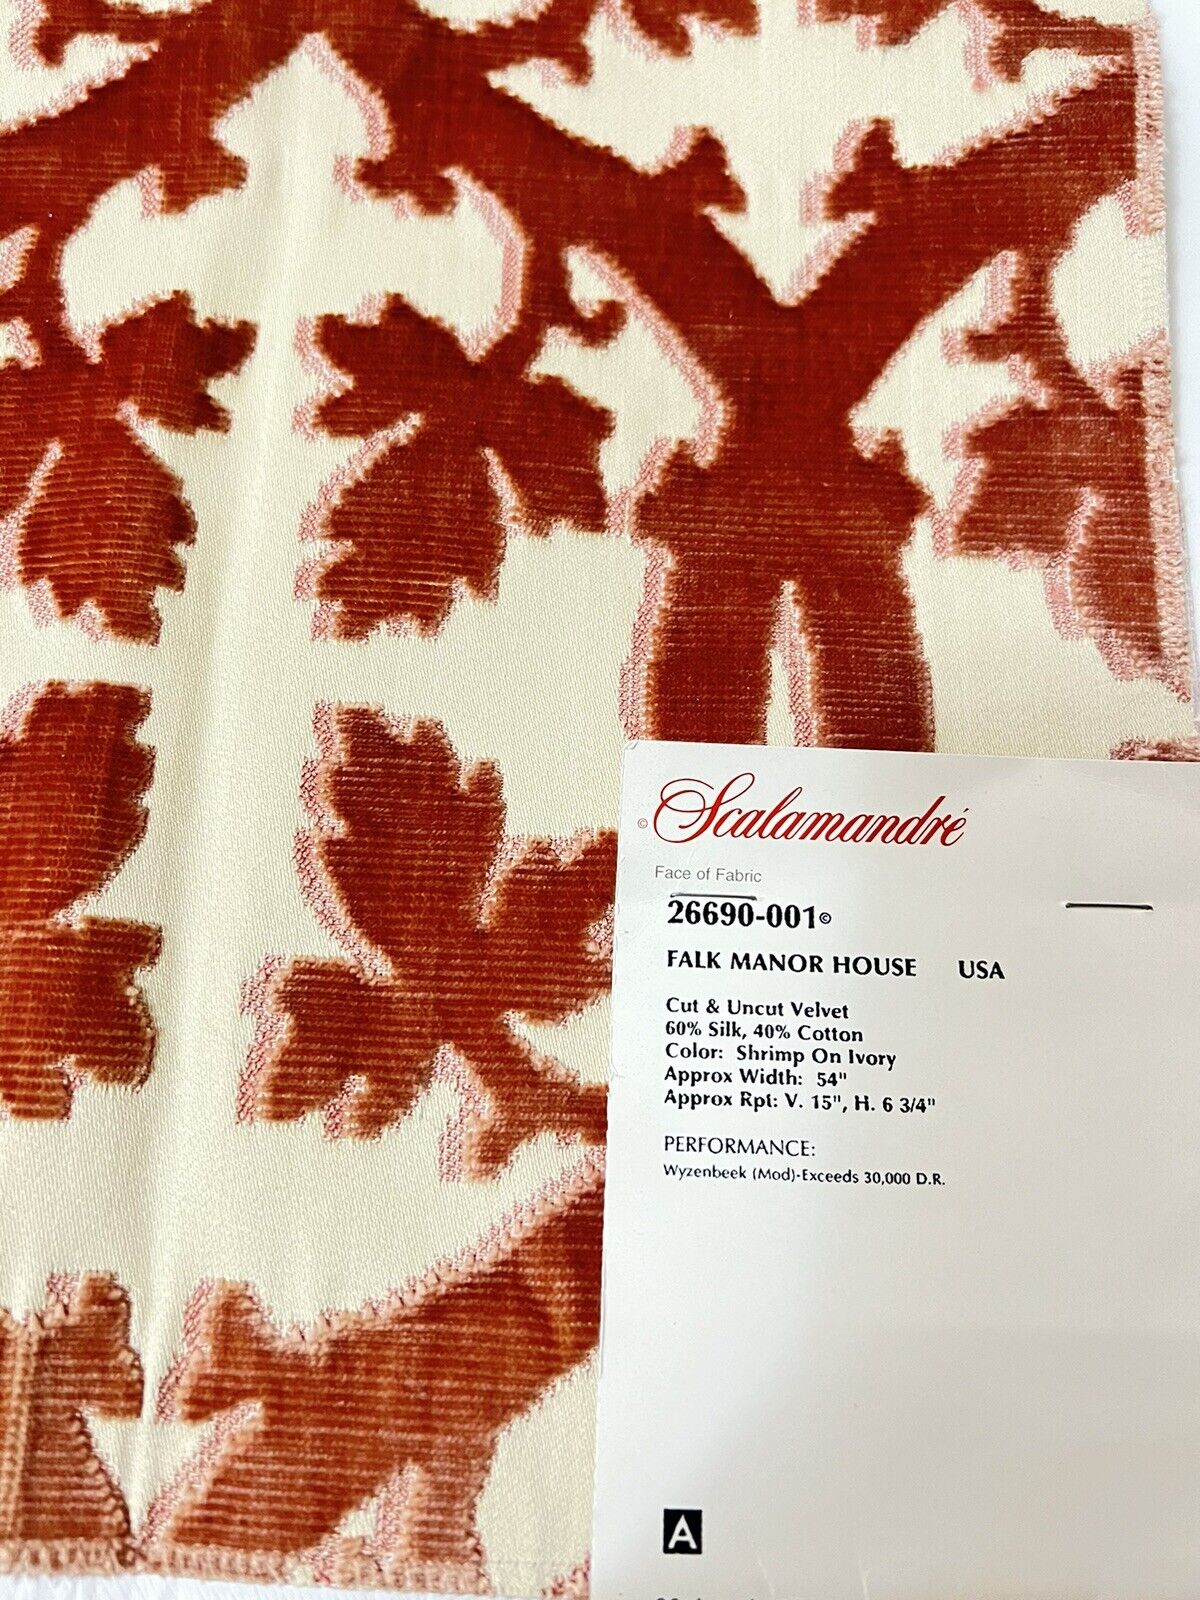 1 Scalamandre fabric- Falk Manor House - V 24”x H 24“-color Shrimp On Ivory